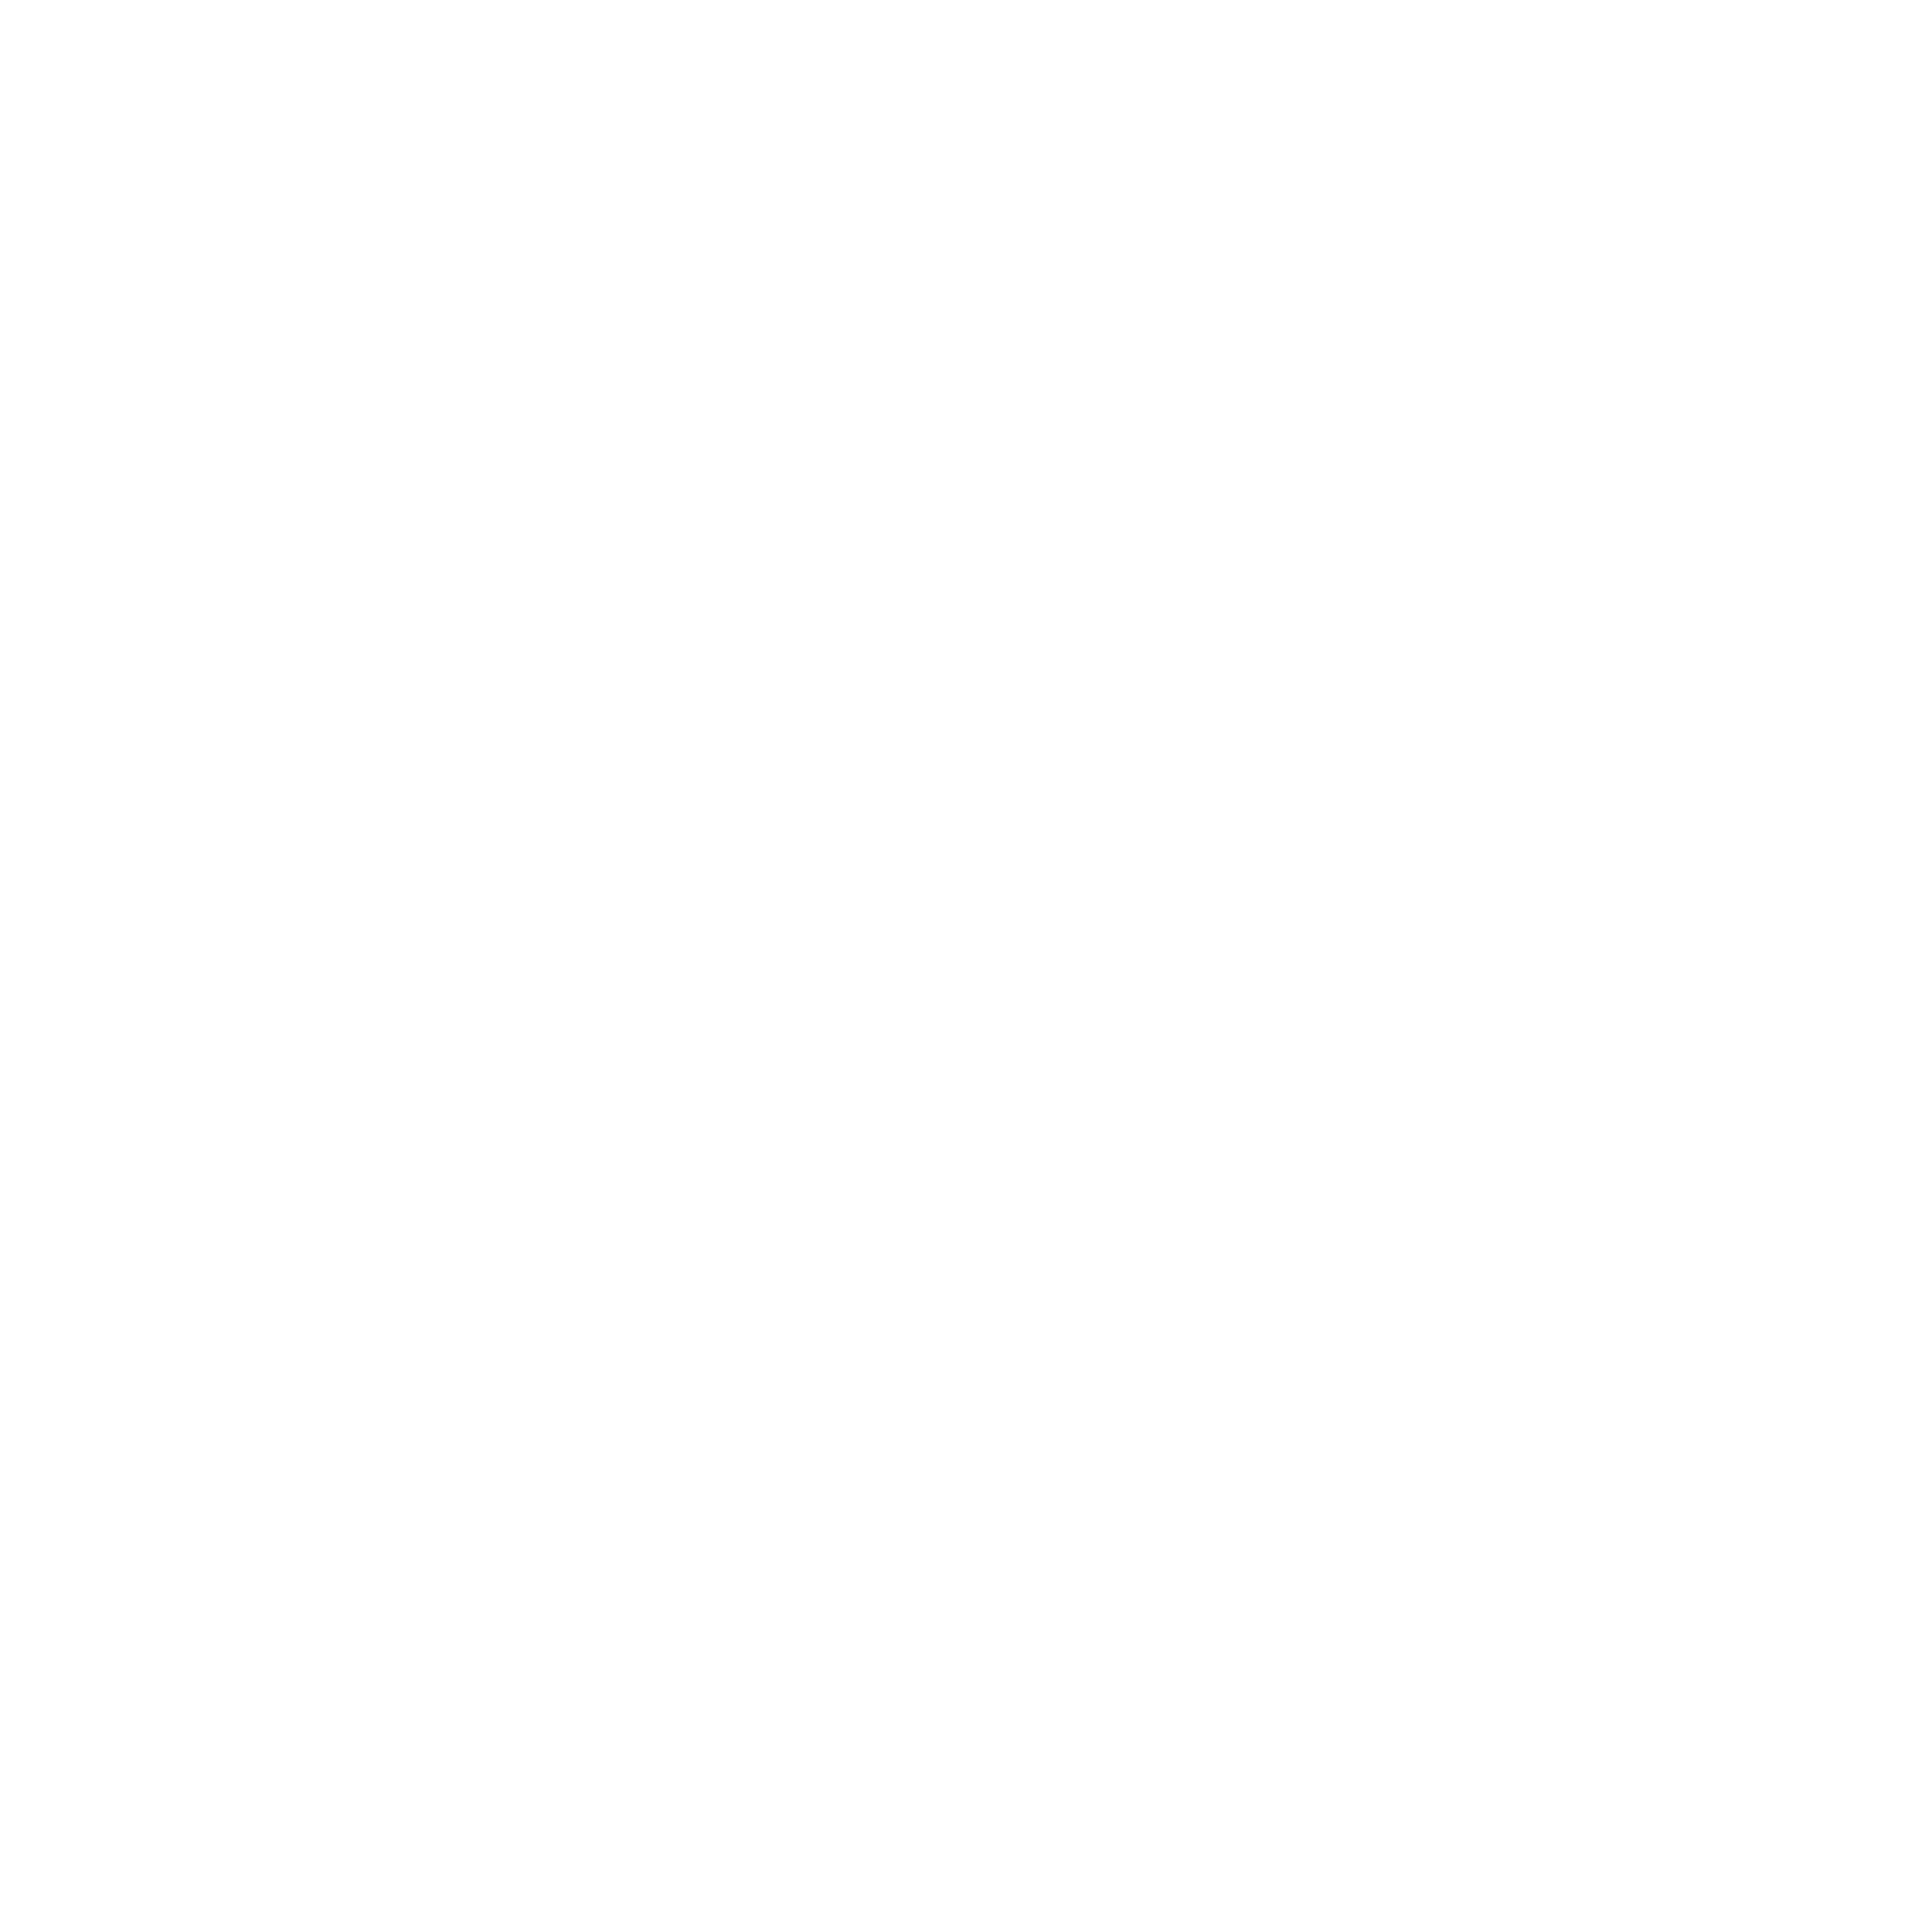 4 Rivers BBQ